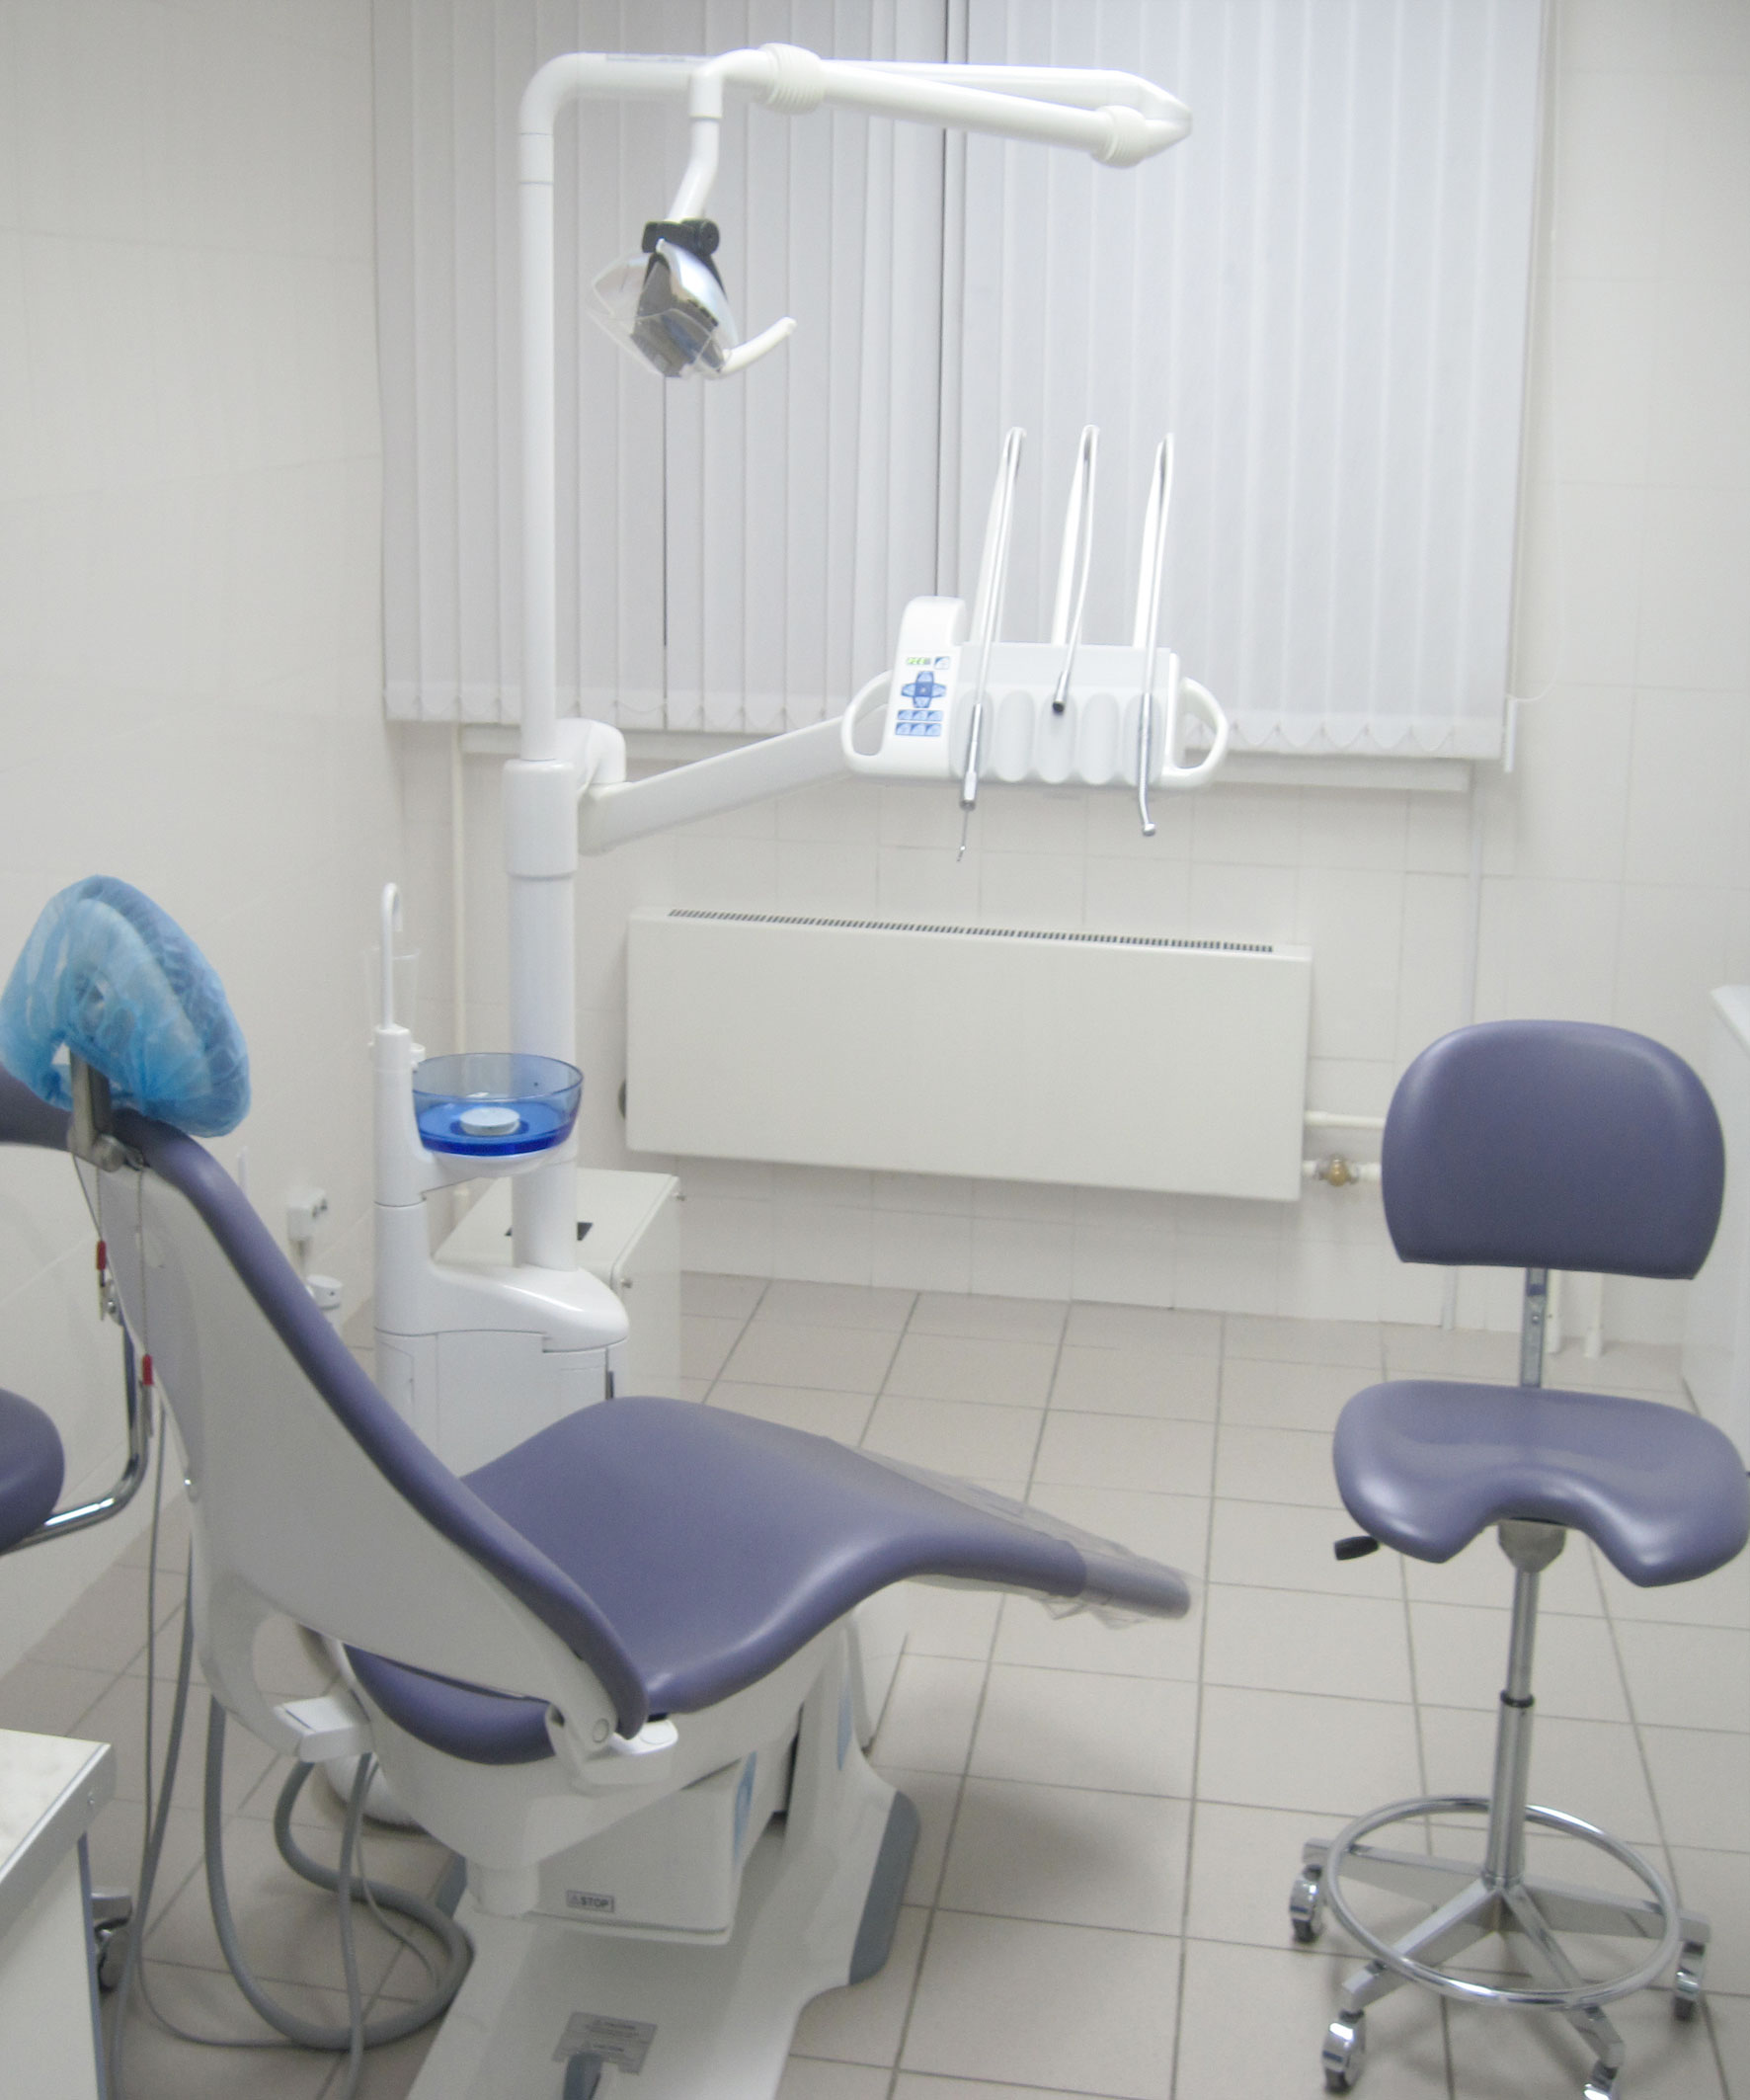 Stomatologie dento amo - recenzii pacient, preturi si promotii in 2016, intrarea in clinica